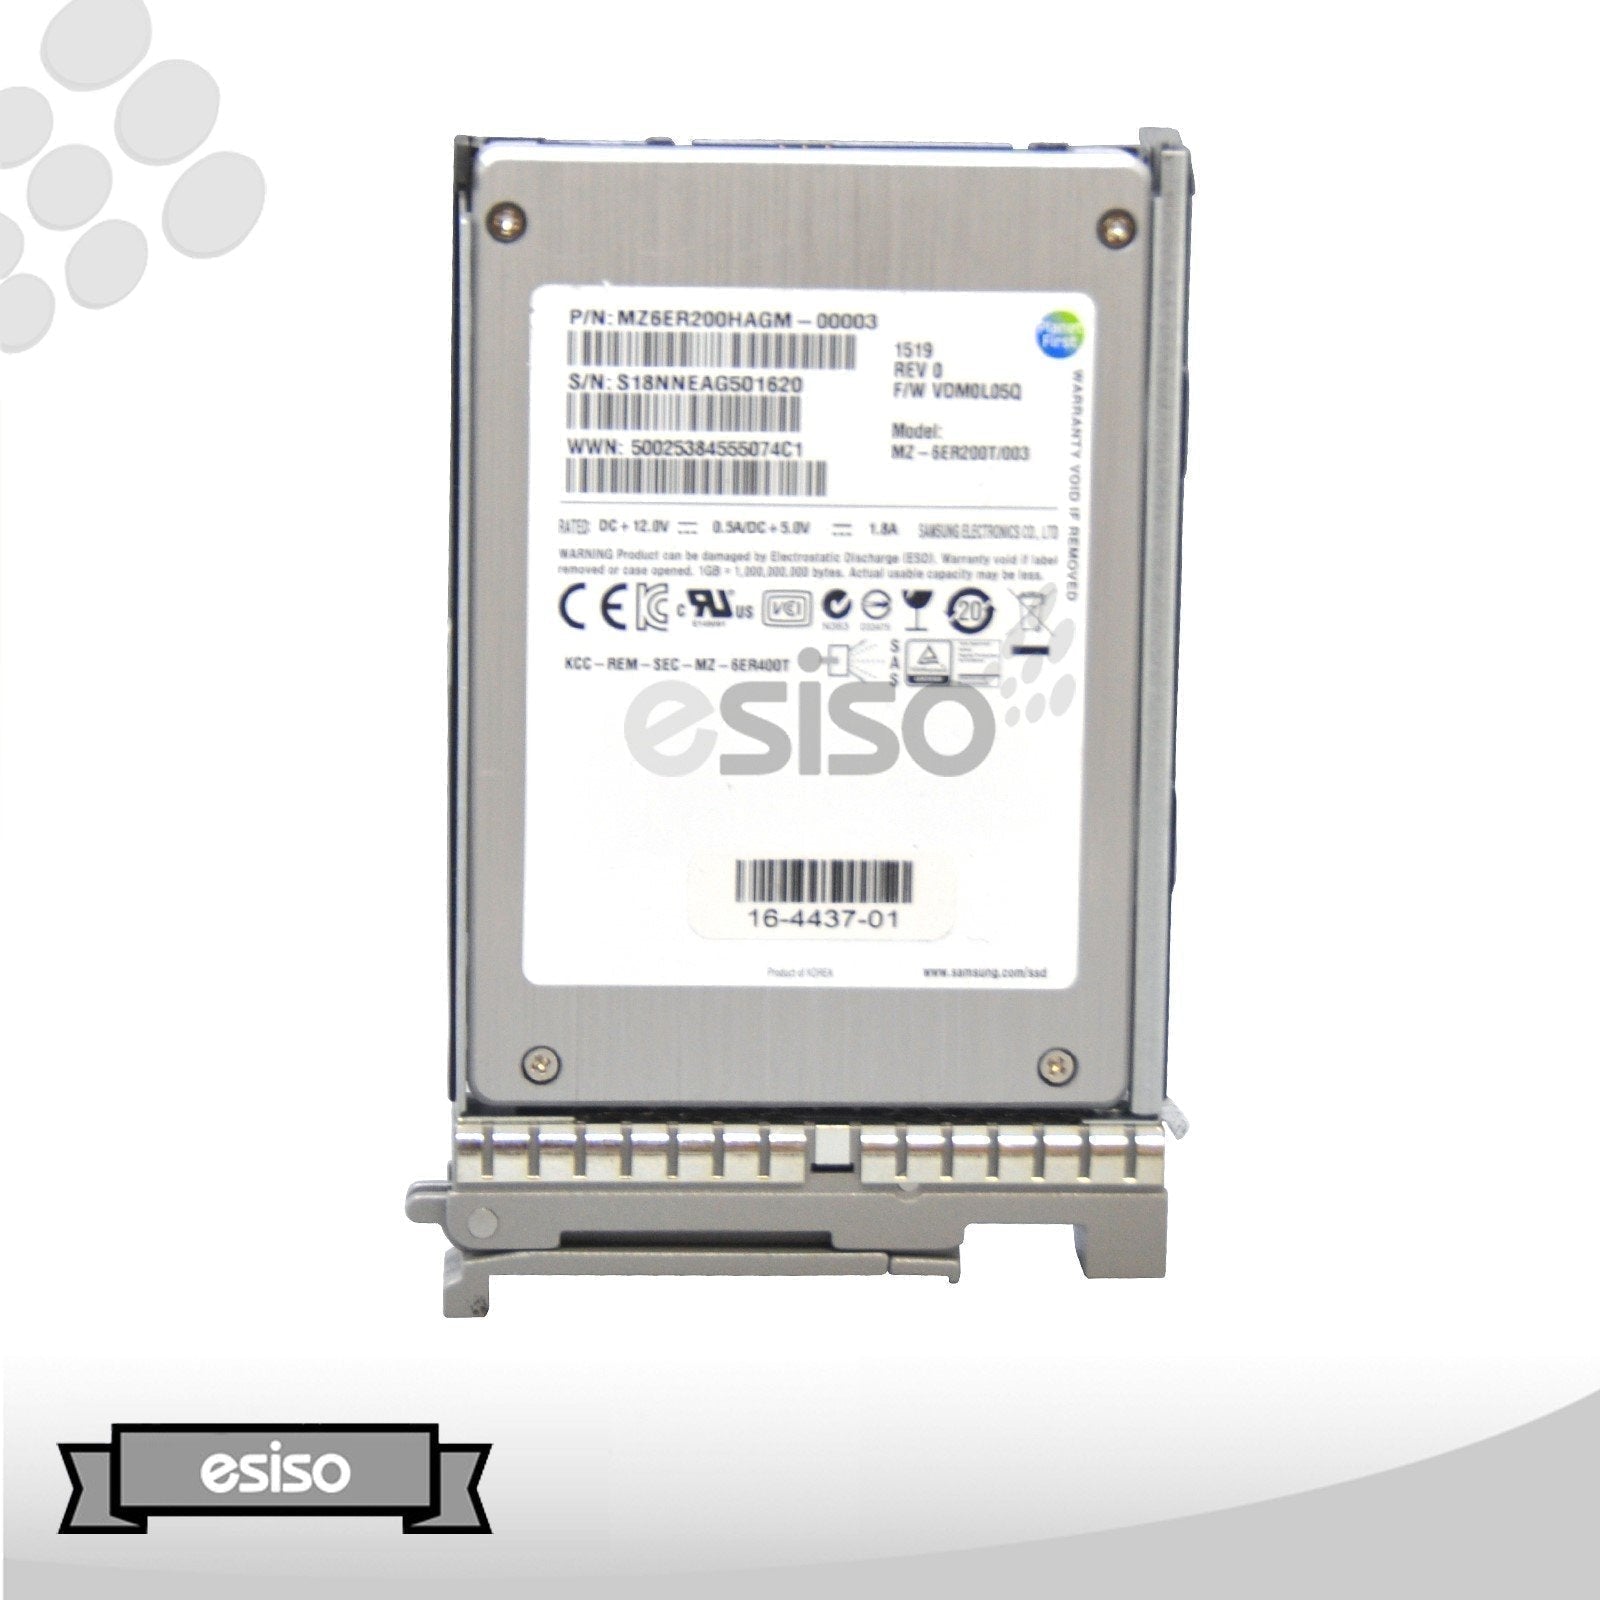 UCS-SD200G0KS2-EP MZ-6ER200T/003 CISCO 200GB 6G 2.5" SAS EMLC SOLID STATE DRIVE